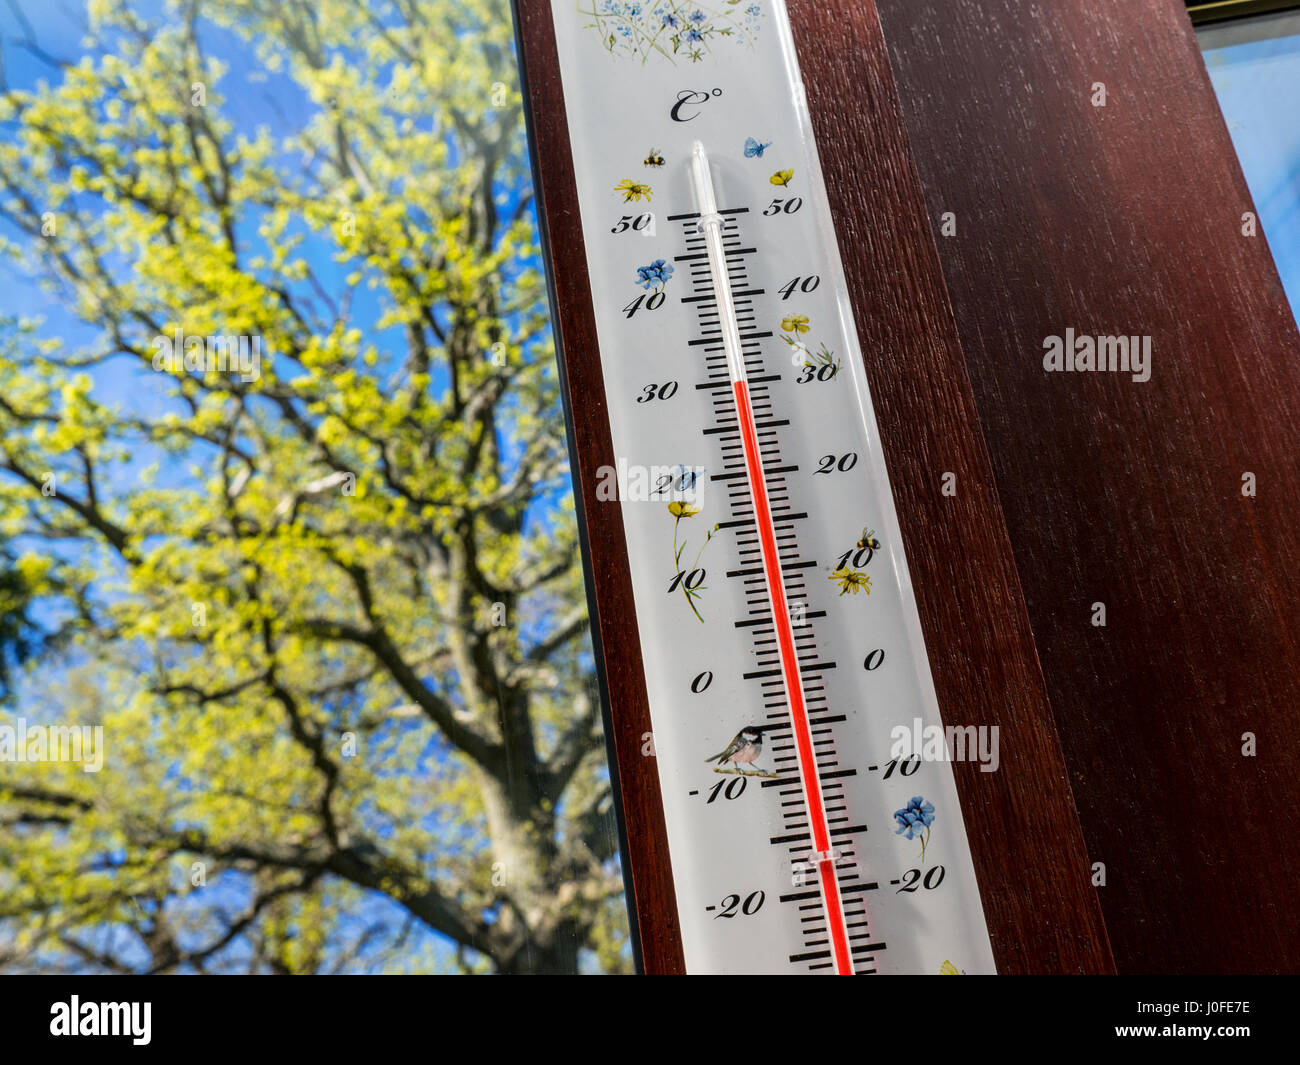 https://c8.alamy.com/comp/J0FE7E/thermometer-with-garden-theme-displays-sunny-30c-degrees-centigrade-J0FE7E.jpg